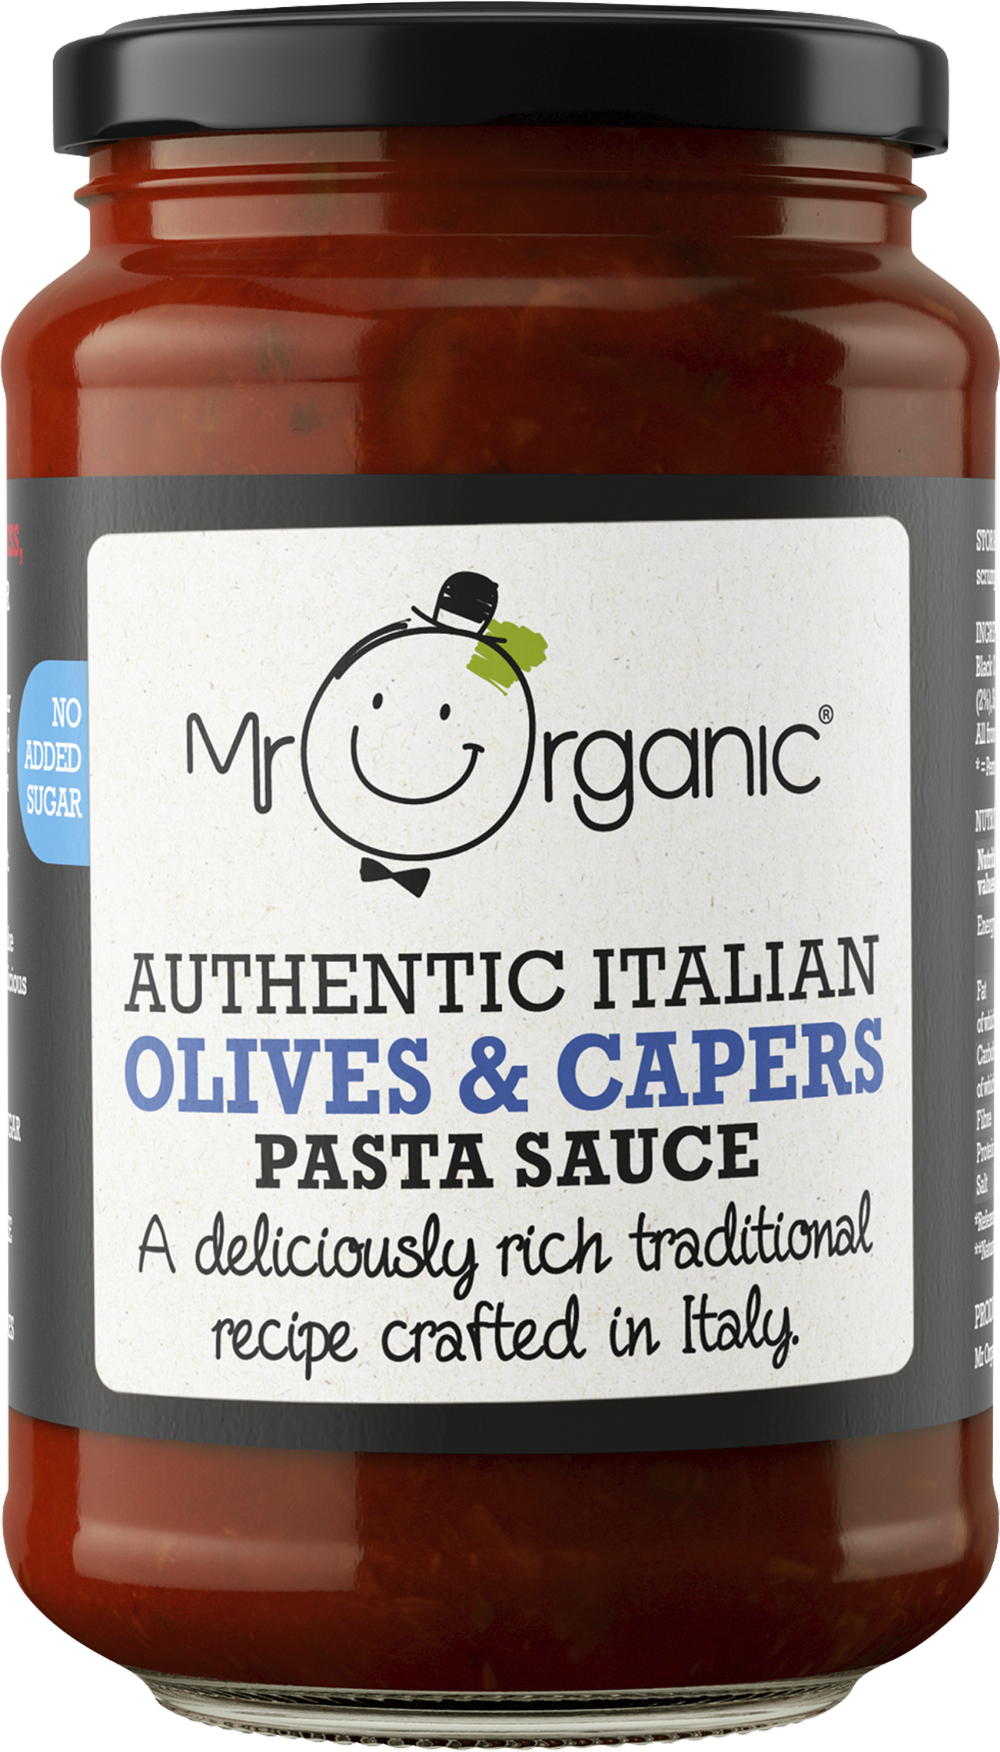 MR ORGANIC Authentic Italian Olives & Capers Pasta Sauce350g